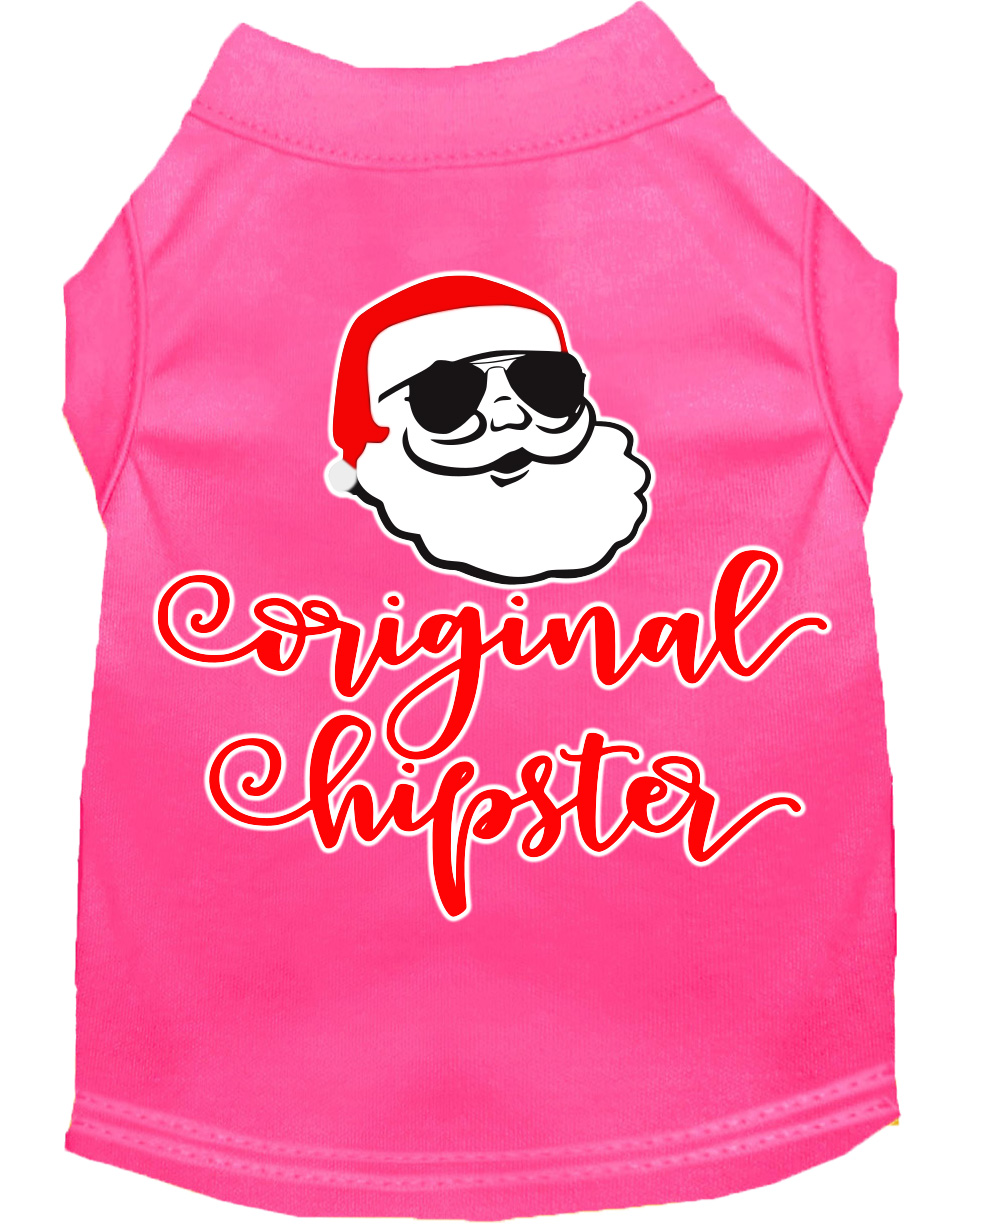 Original Hipster Screen Print Dog Shirt Bright Pink Lg